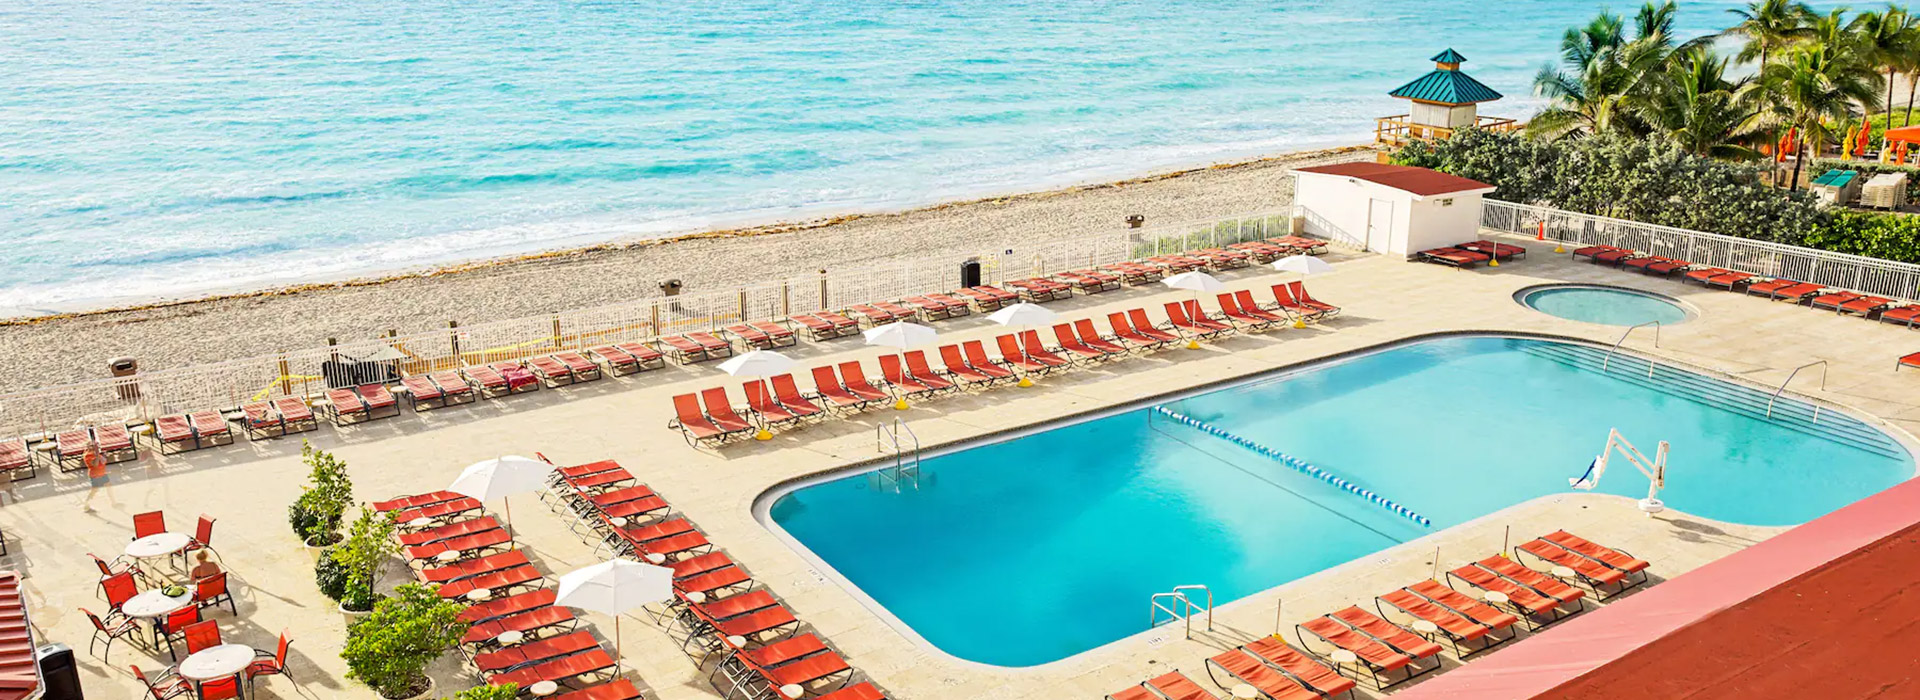 Ramada Plaza Marco Polo Beach Resort Pool & Beach View